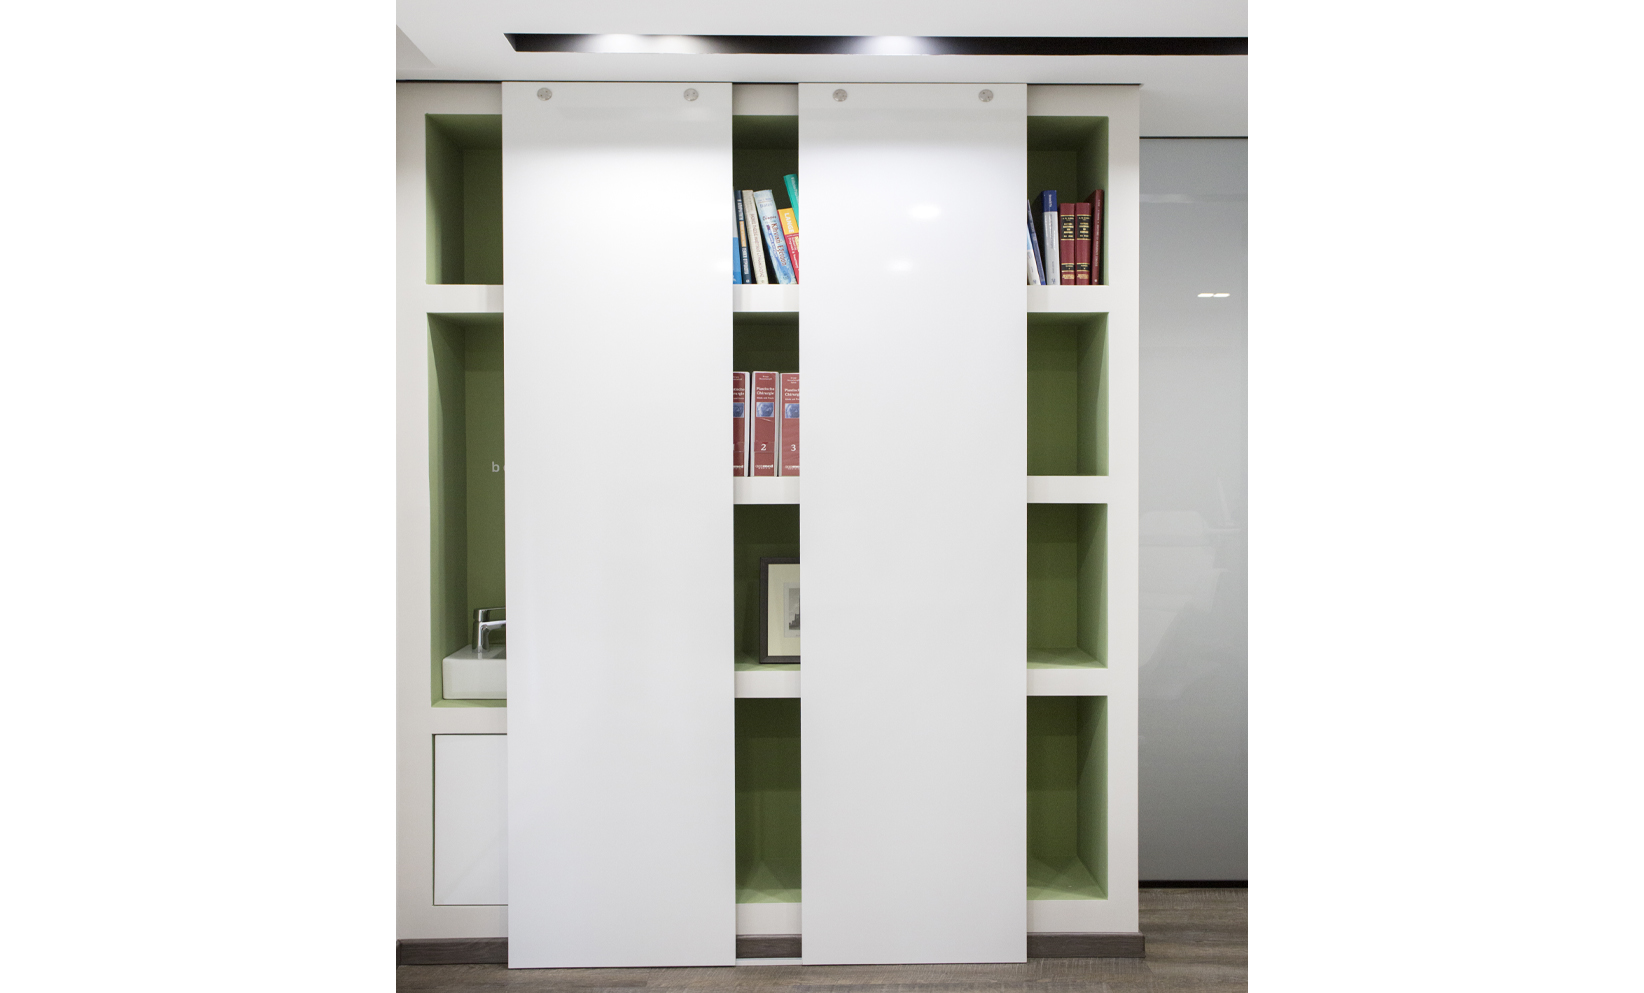 12-interior-design-medical-office-desk-green-closet-details